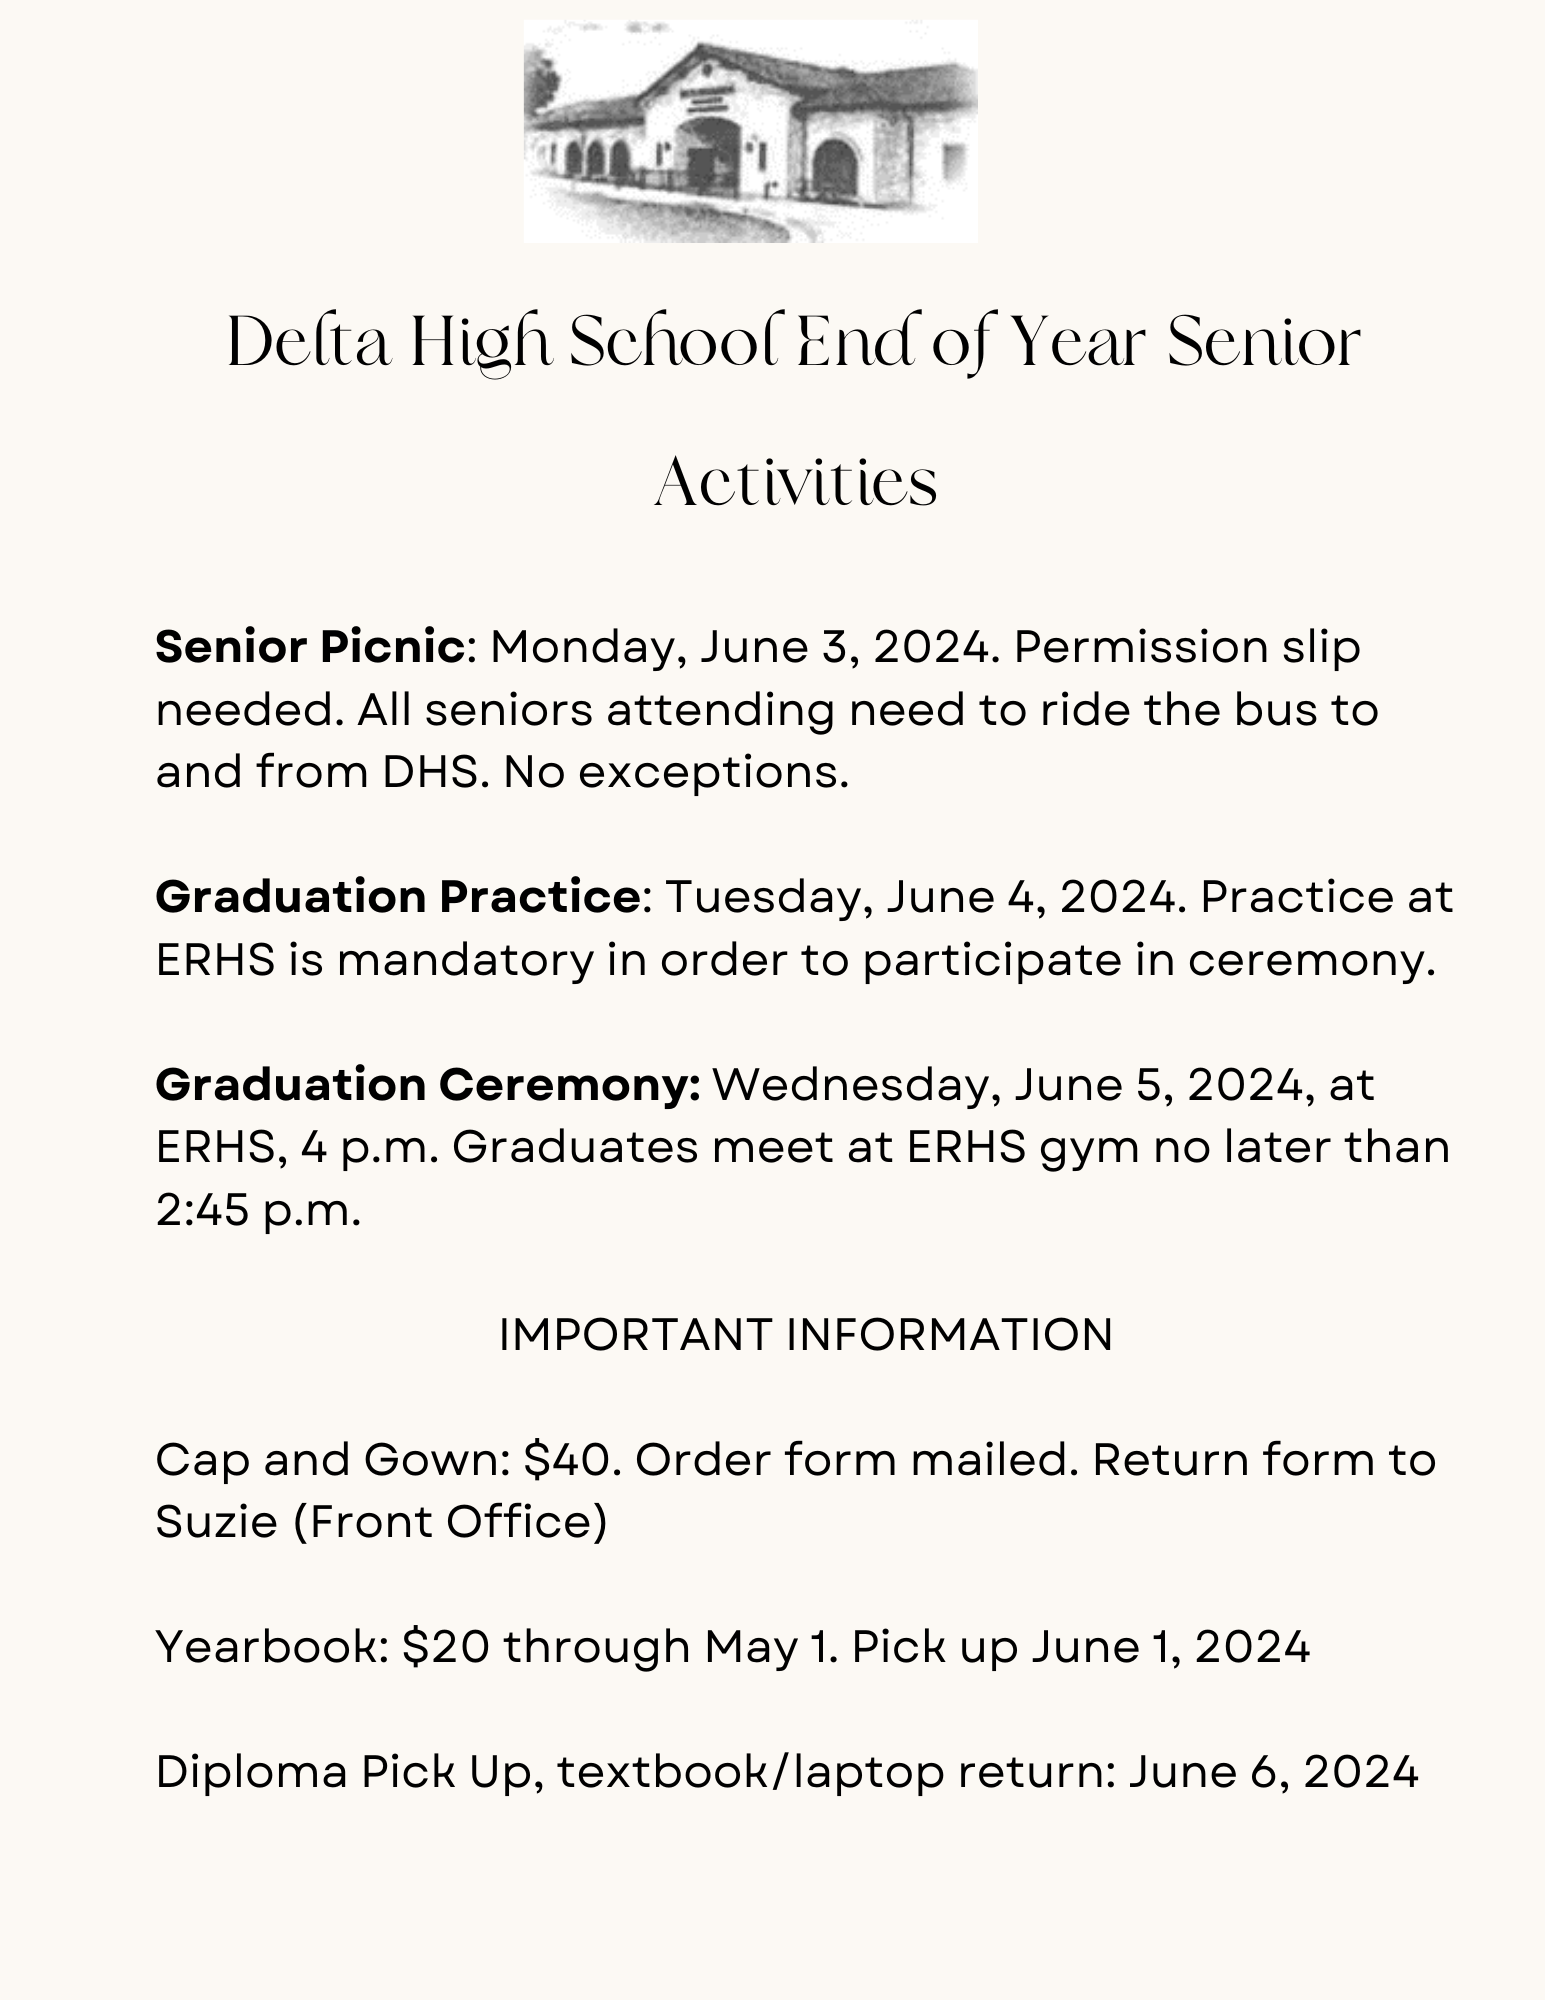 Graduation Info